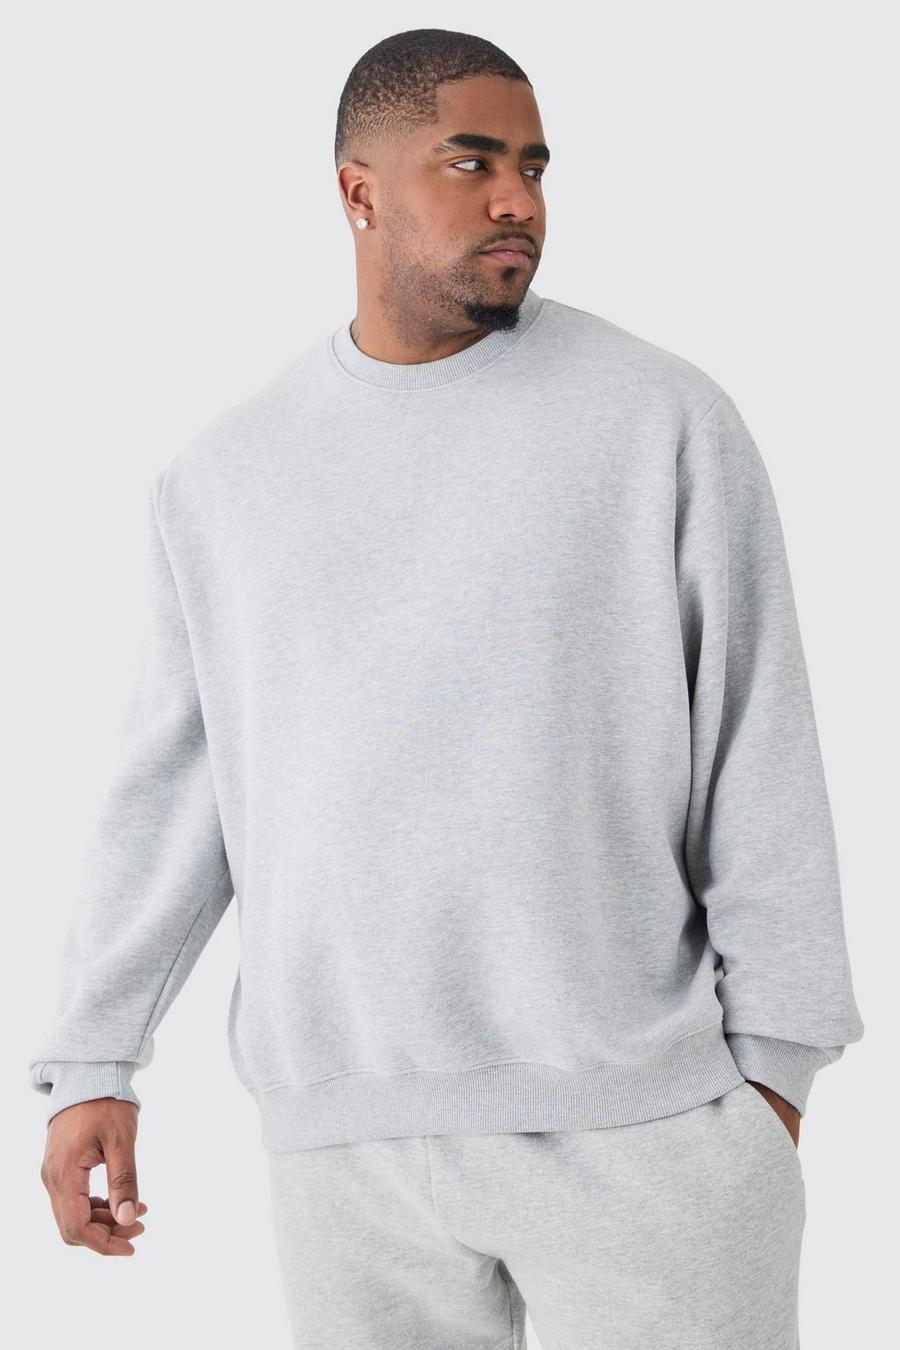 Plus Basic Sweatshirt In Grey Marl image number 1